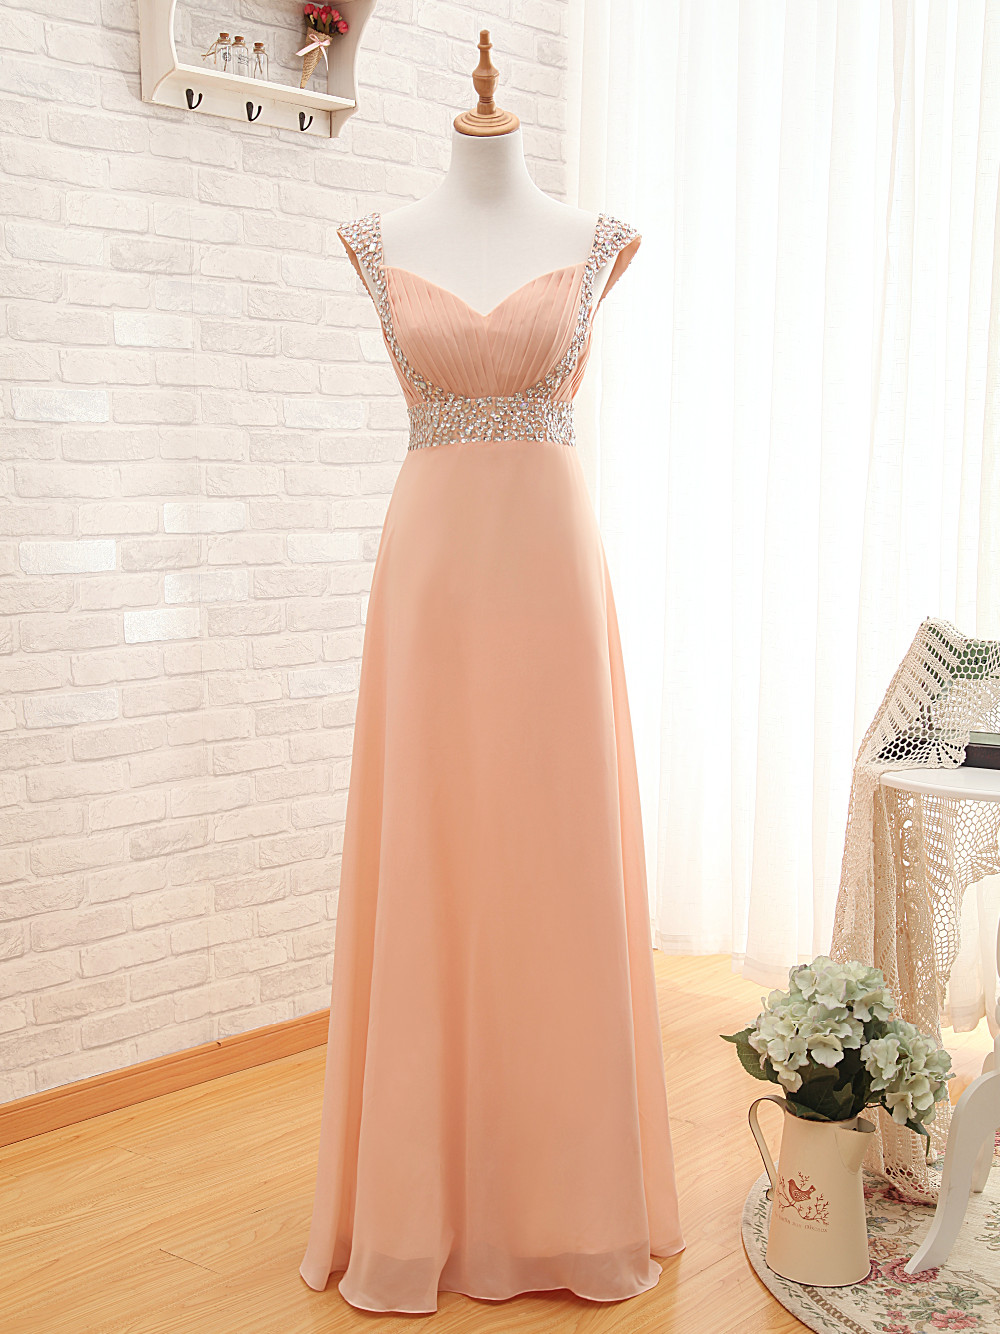 Elegant Sweetheart Cap Sleeves Beaded Chiffon Formal Prom Dress, Beautiful Long Prom Dress, Banquet Party Dress